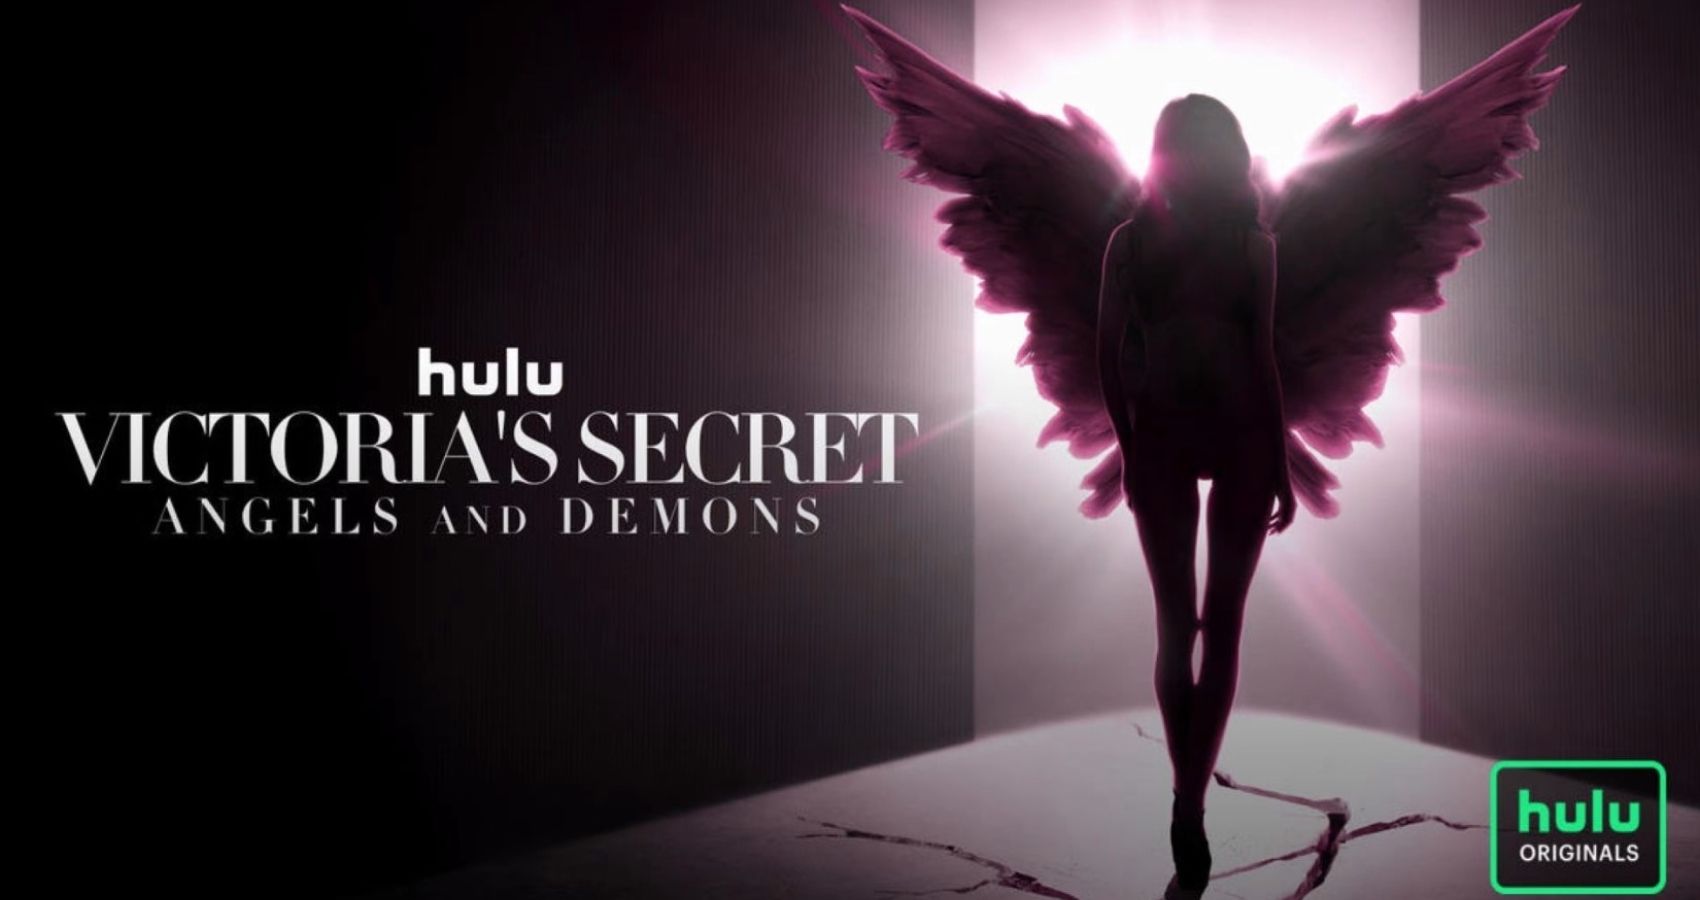 Hulu's Victoria's Secret Angels and Demons